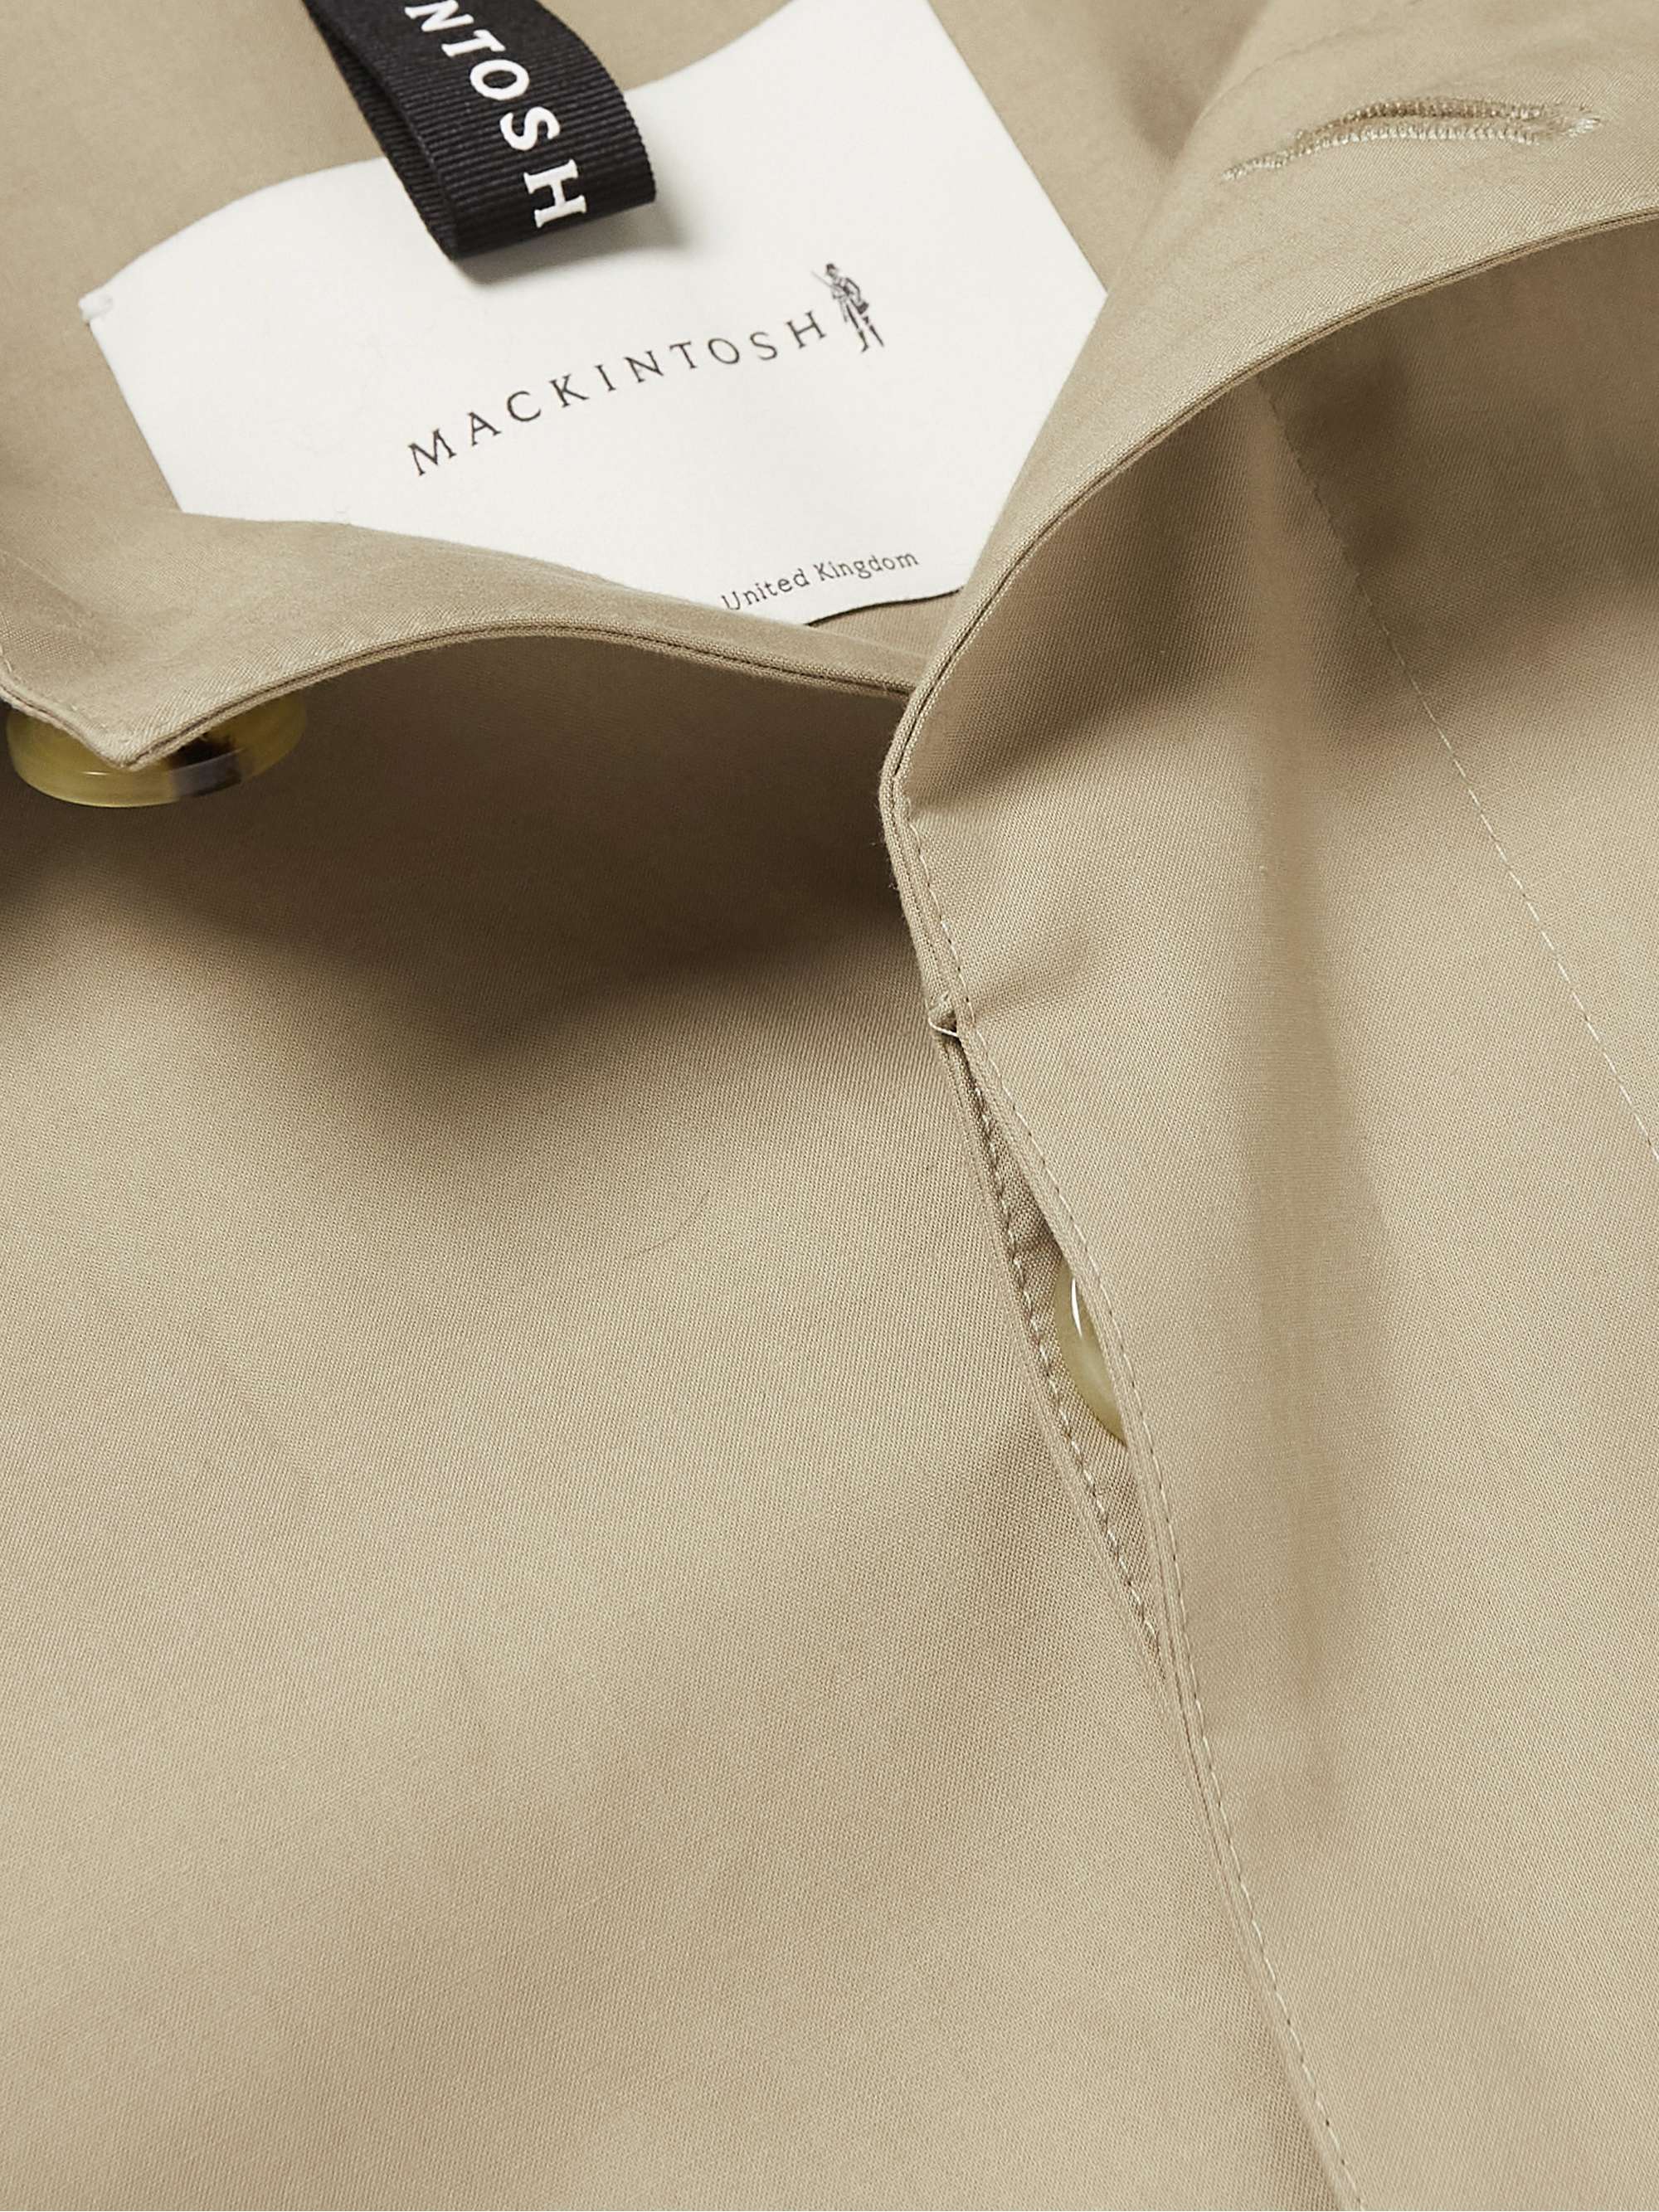 MACKINTOSH Cambridge Bonded Cotton Trench Coat